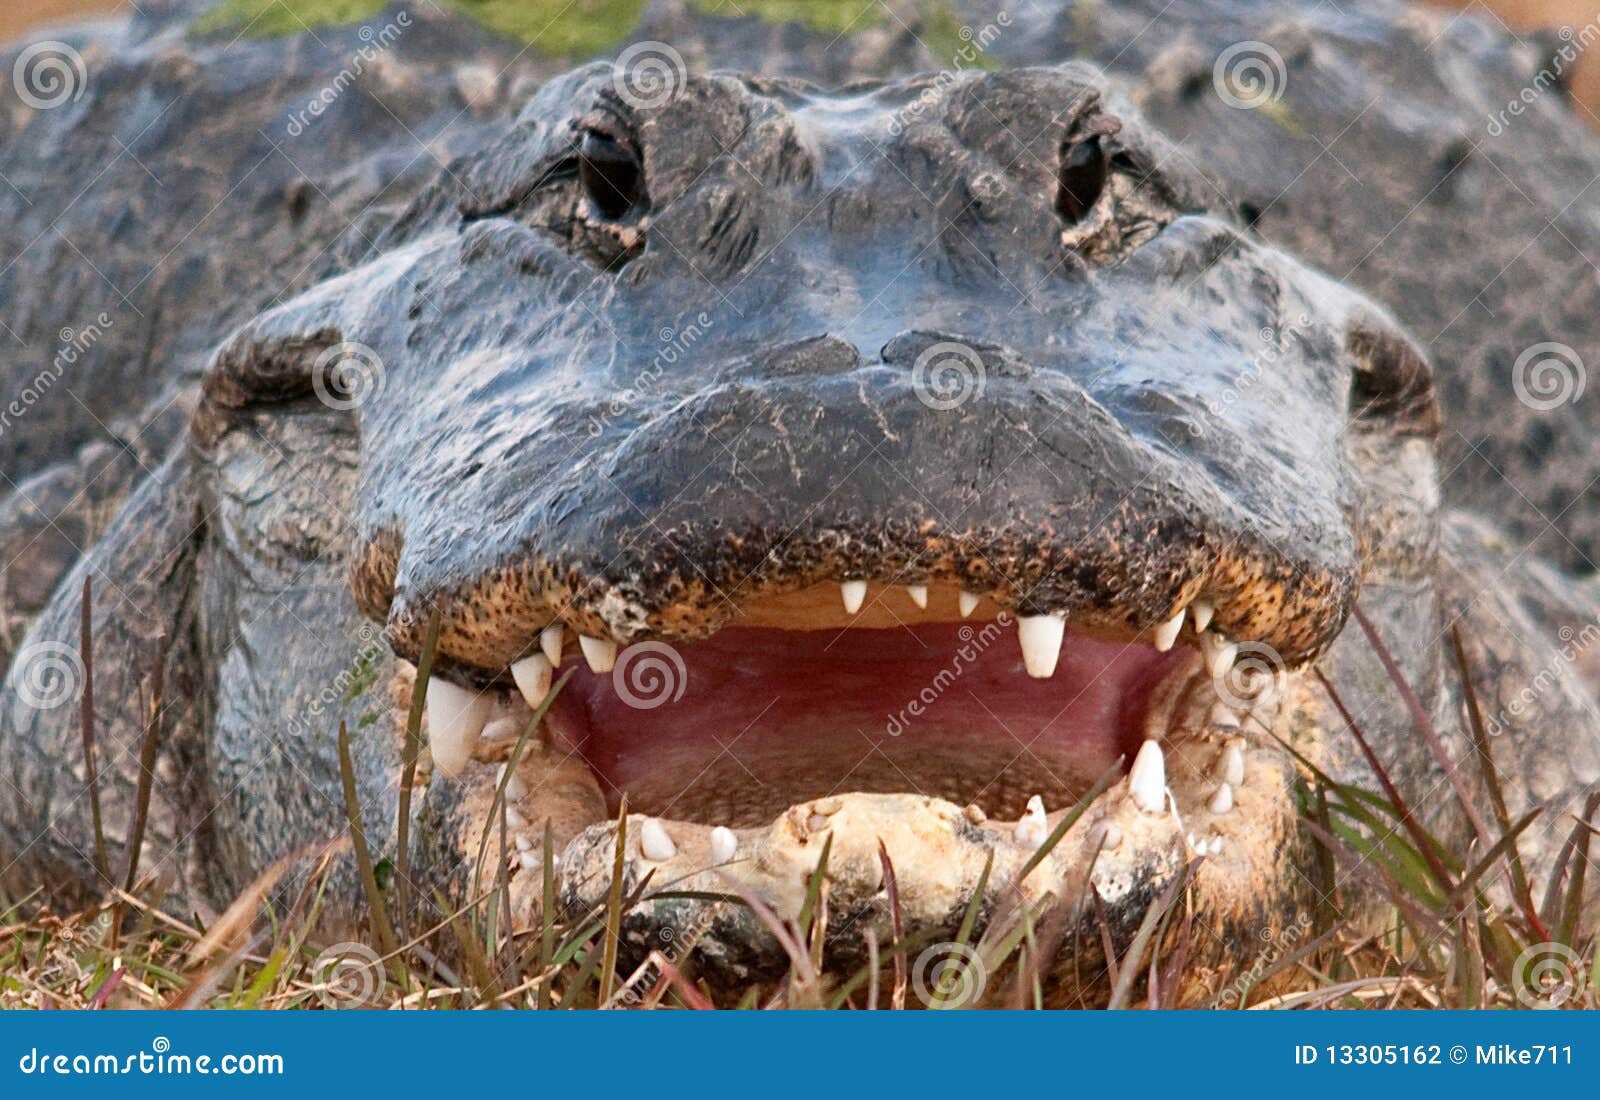 Alligators Mouth 36